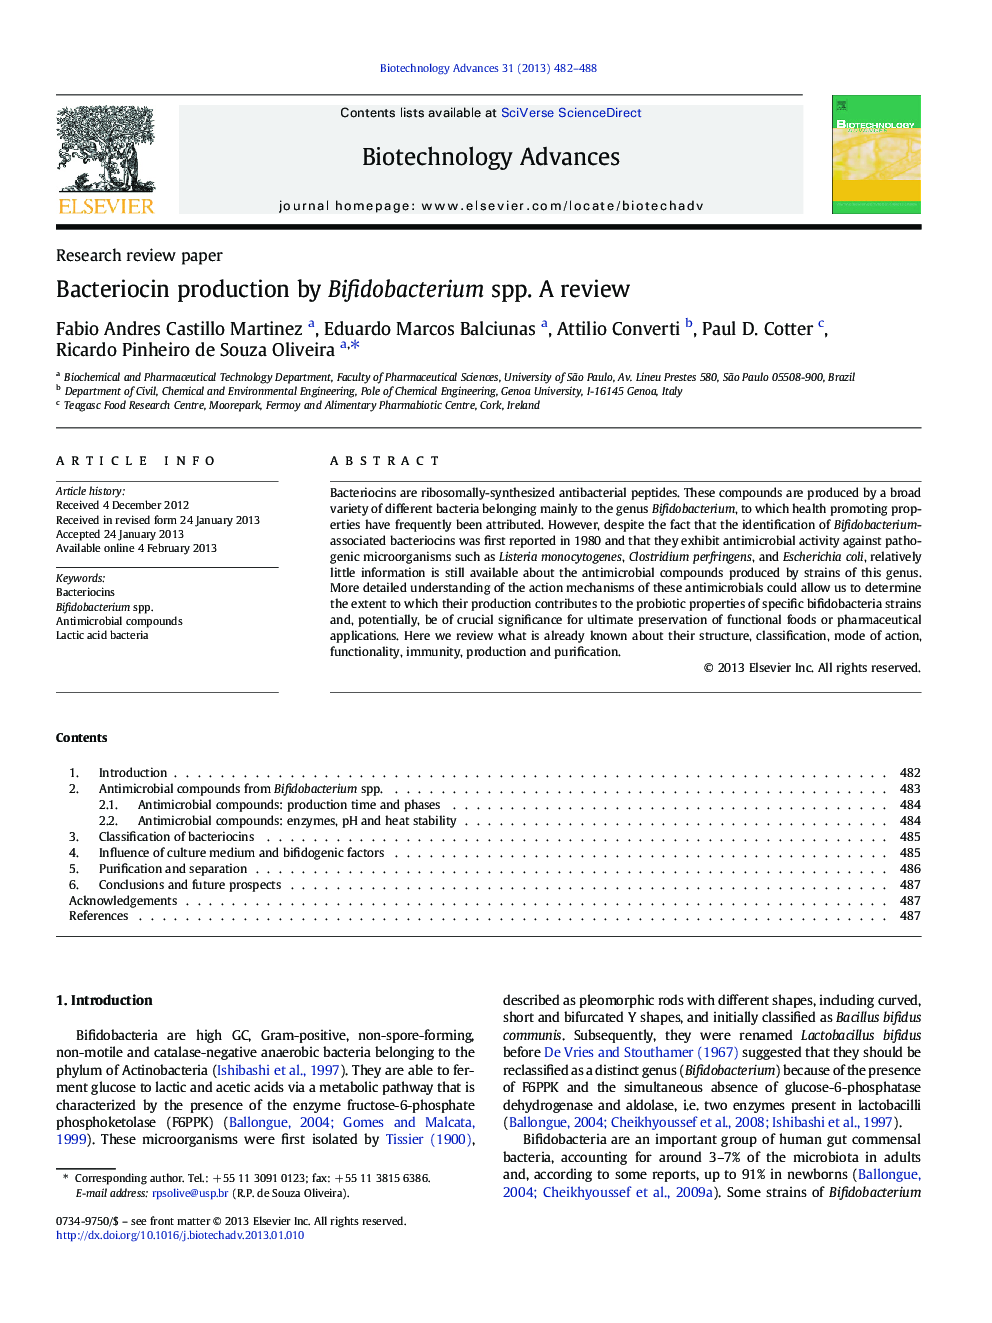 Bacteriocin production by Bifidobacterium spp. A review